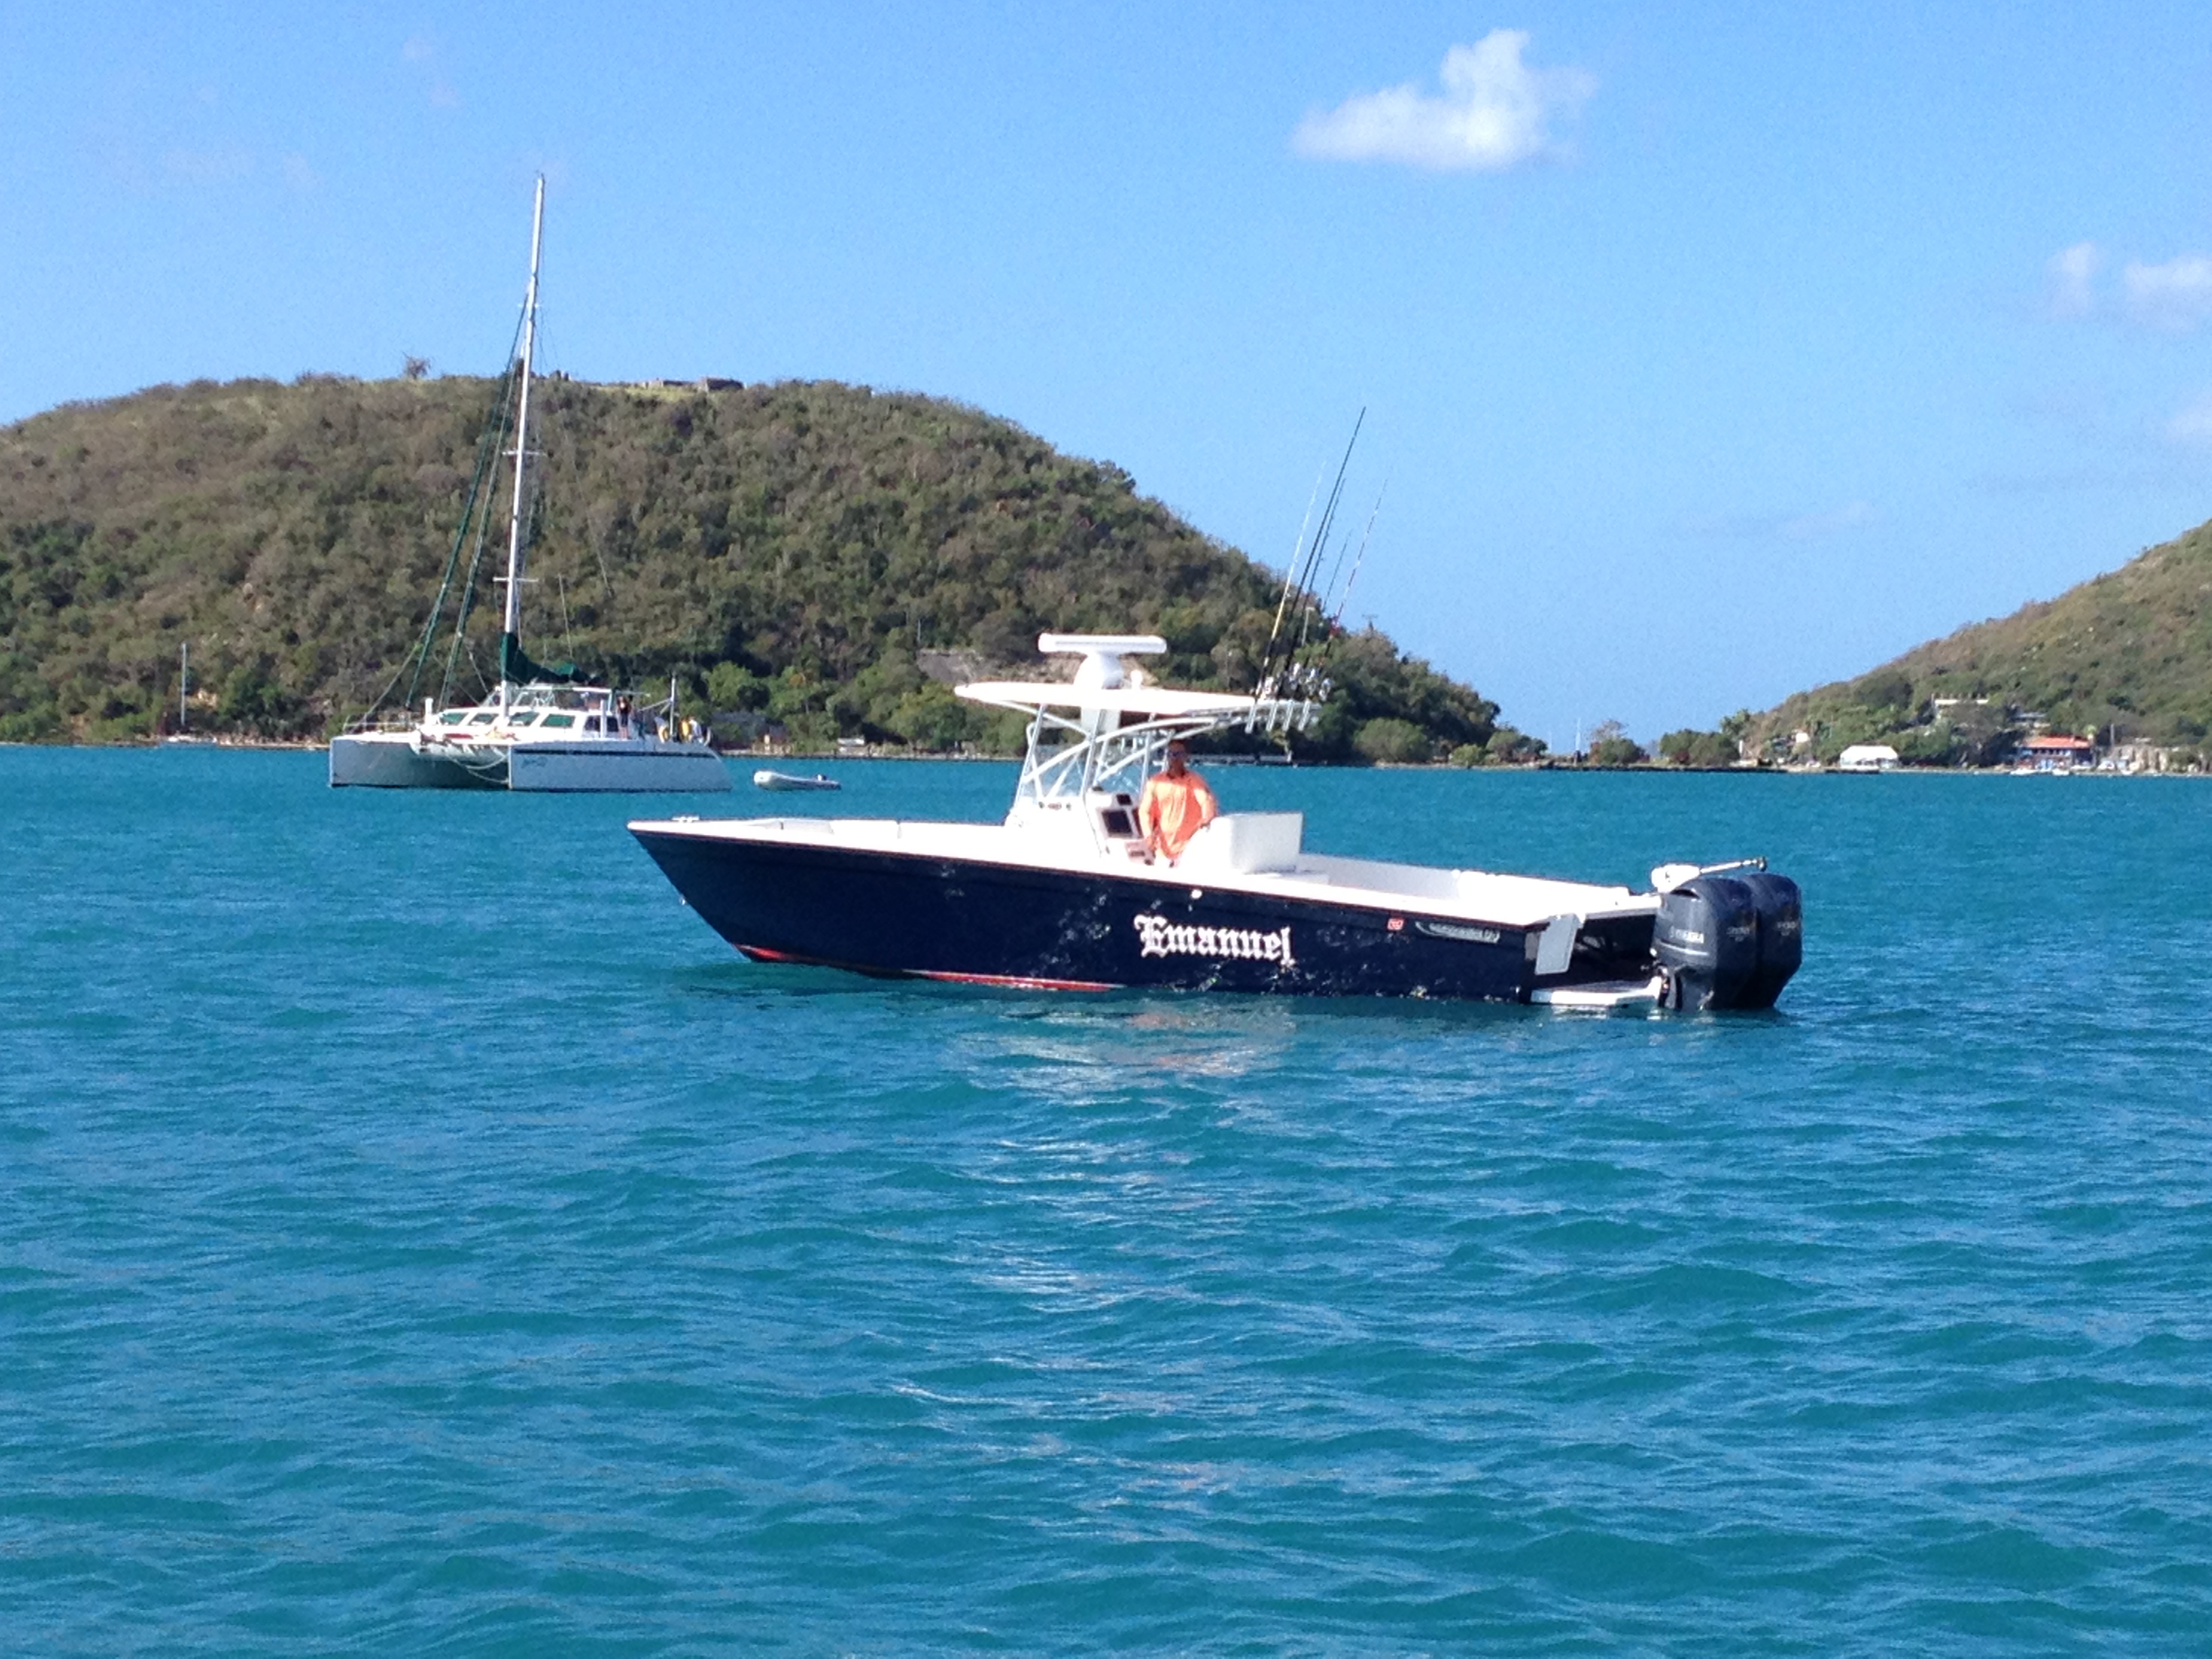 37' Calypso Marine Deep V charter fishing